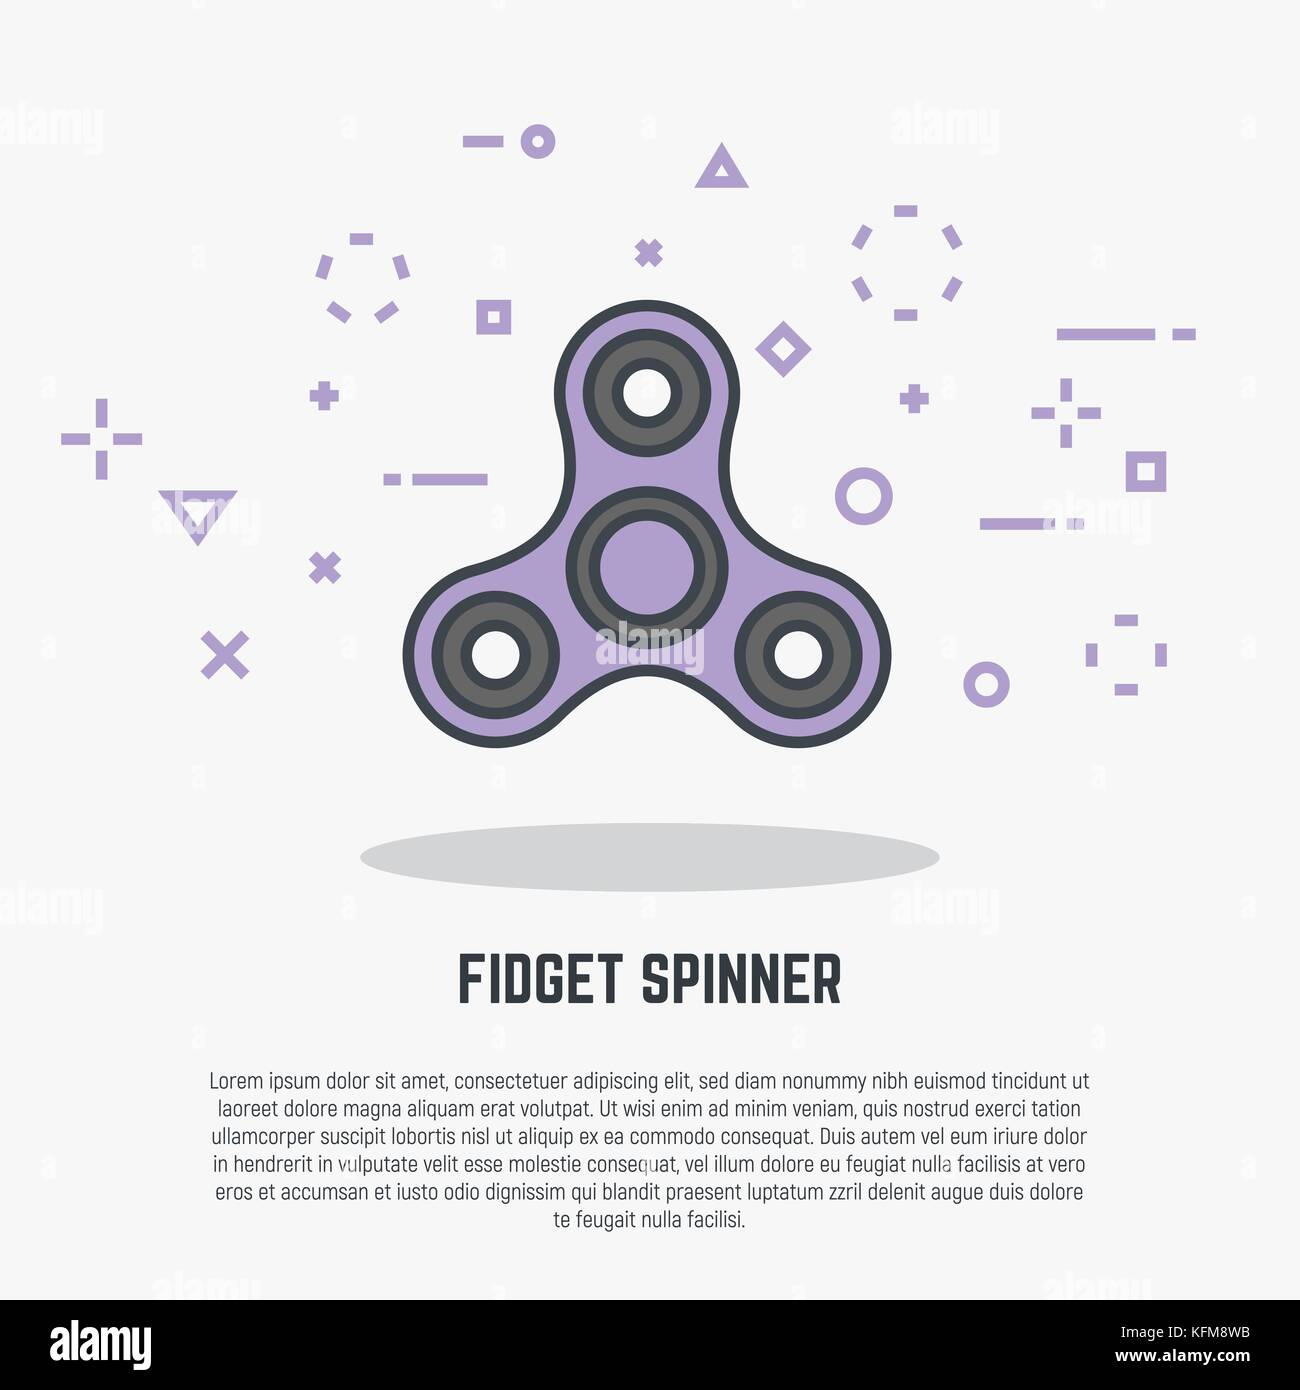 Fidget spinner illustration Stock Vector